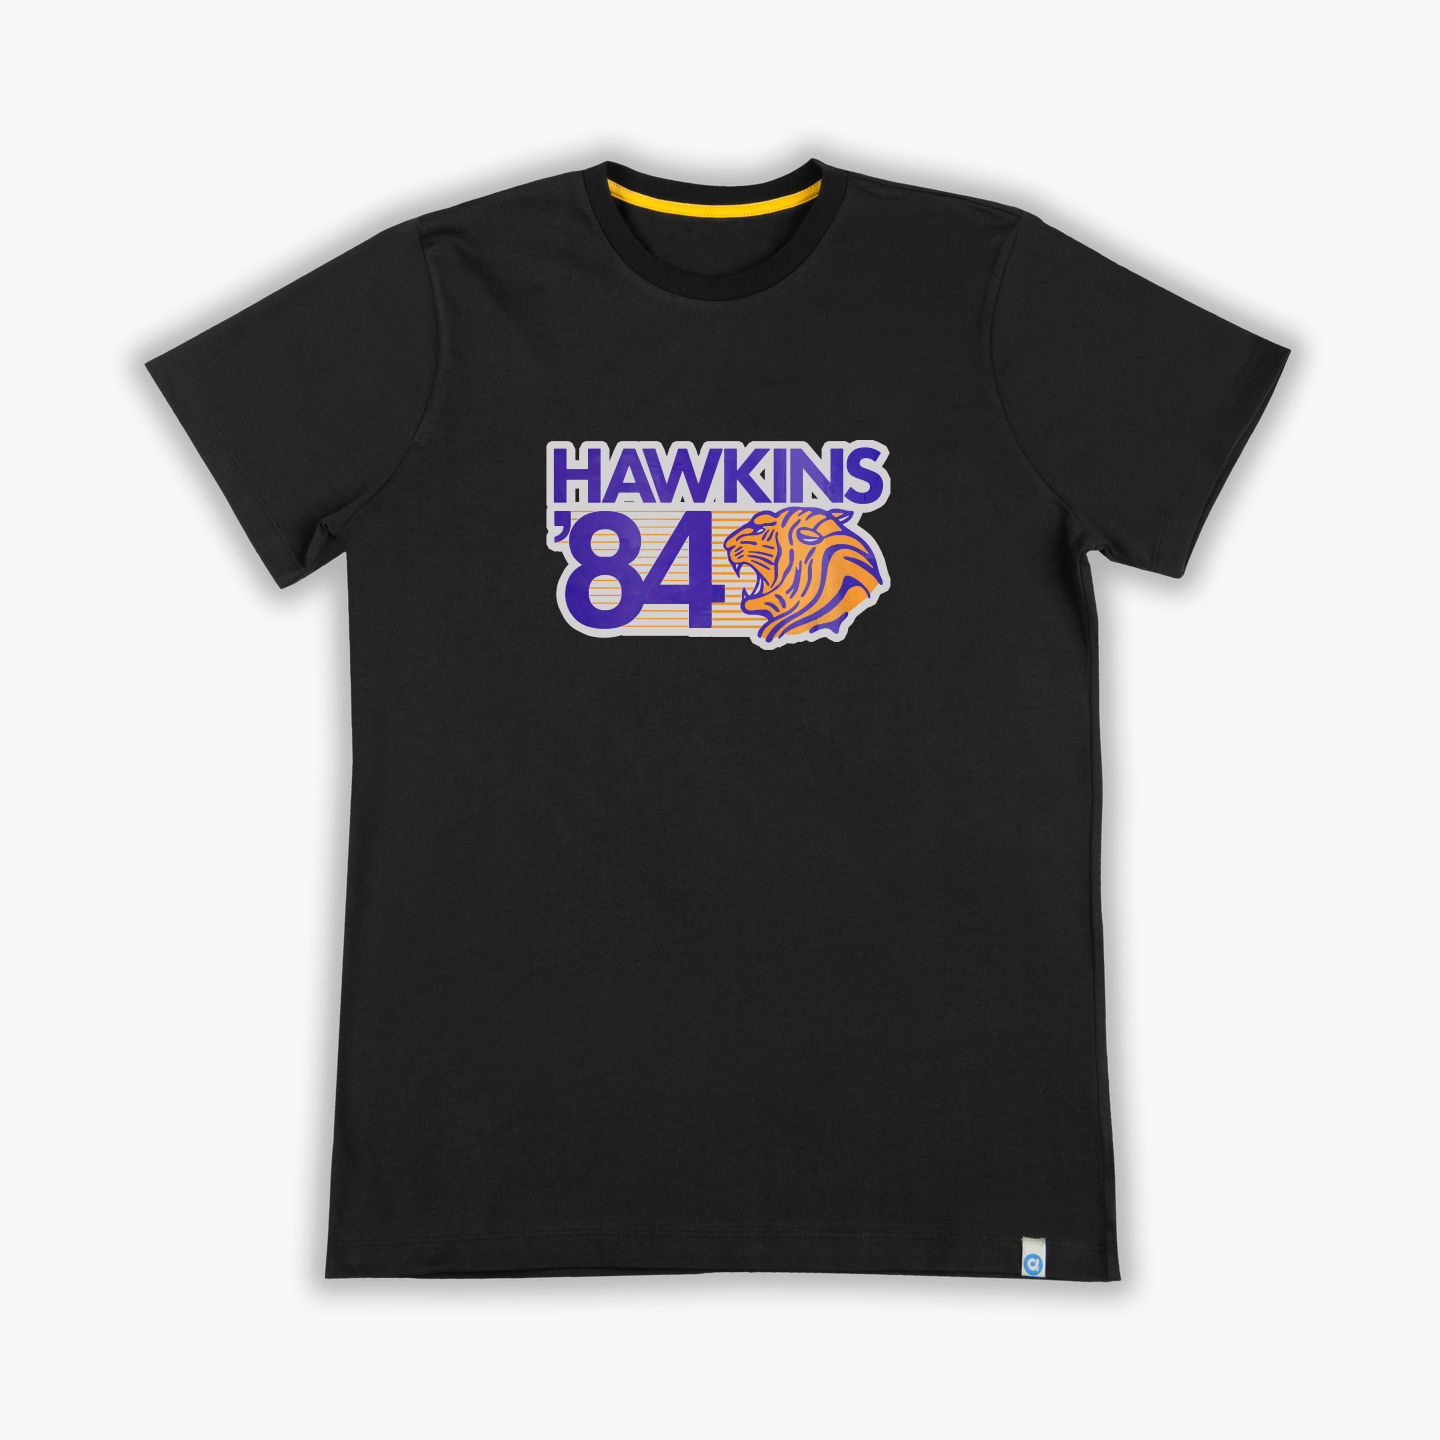 Hawkings 1984 - Tişört